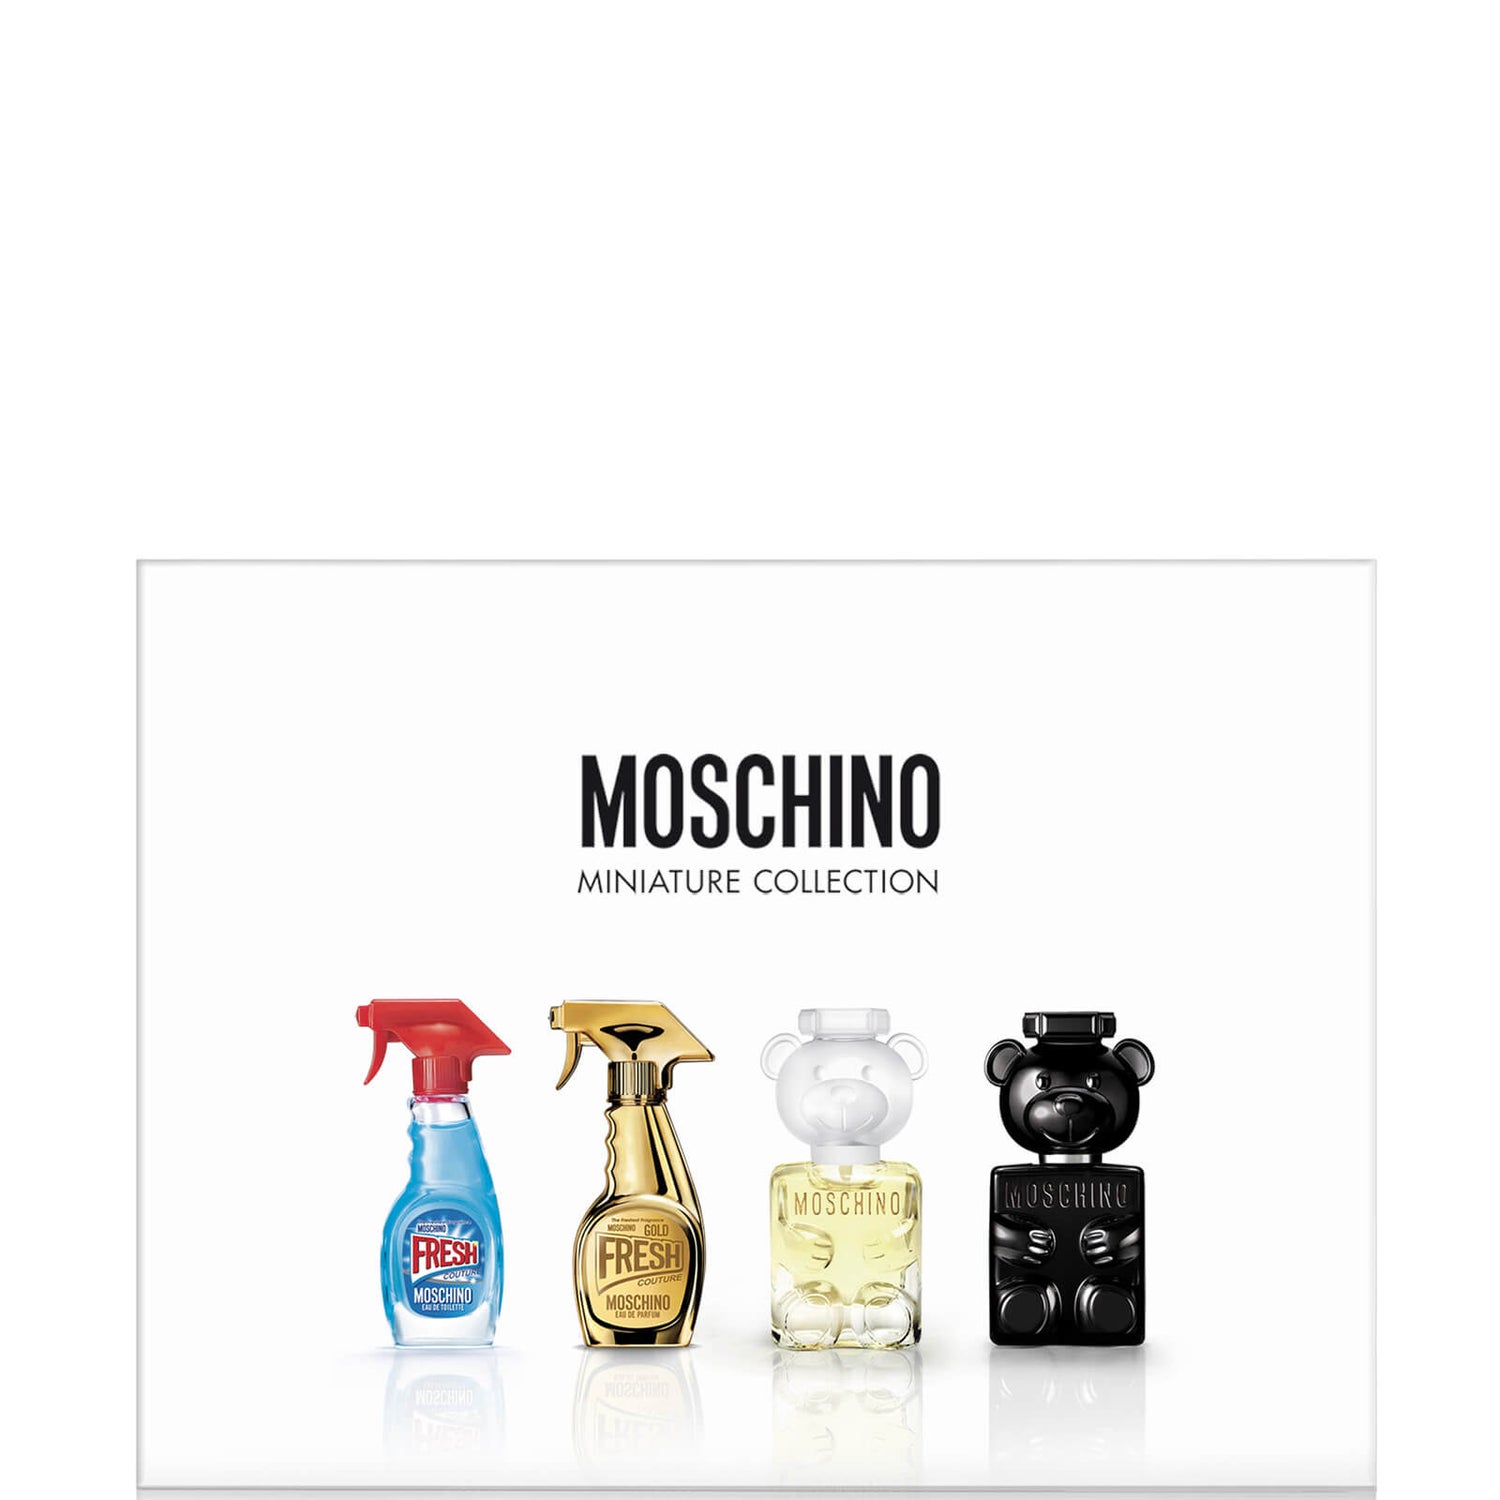 Moschino Mini Collection 2020